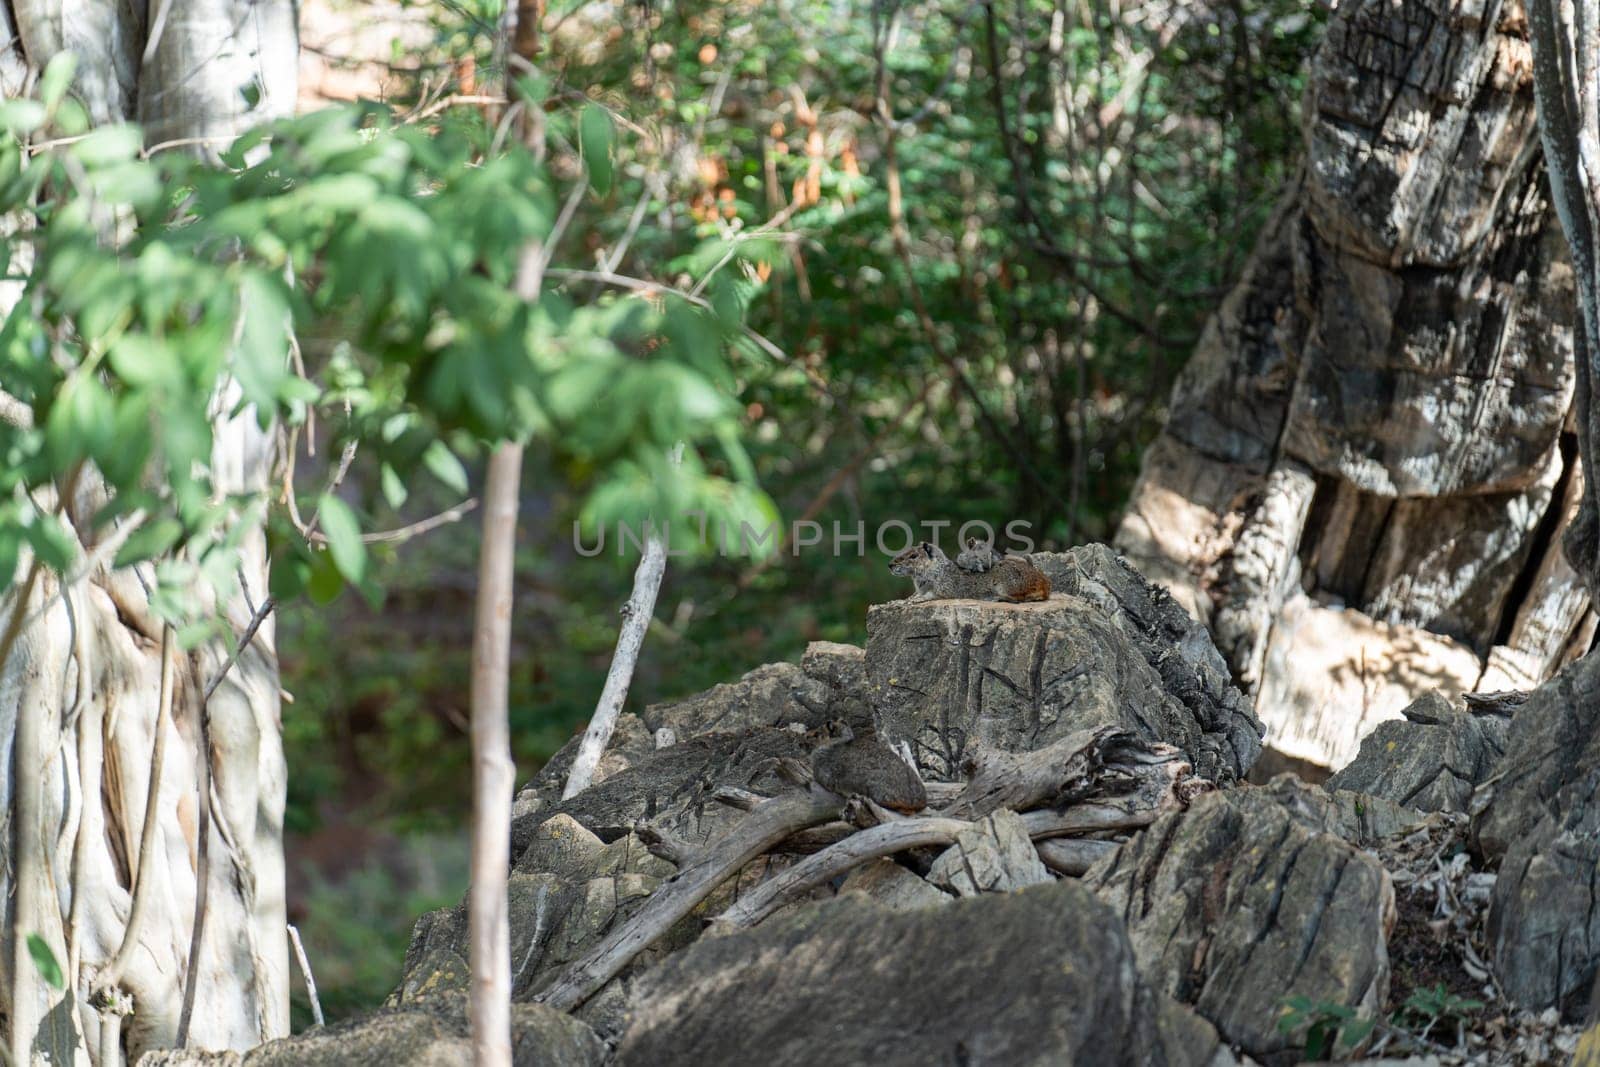 Moco Rodents Resting Camouflaged on Rocks in Chapada Diamantina by FerradalFCG